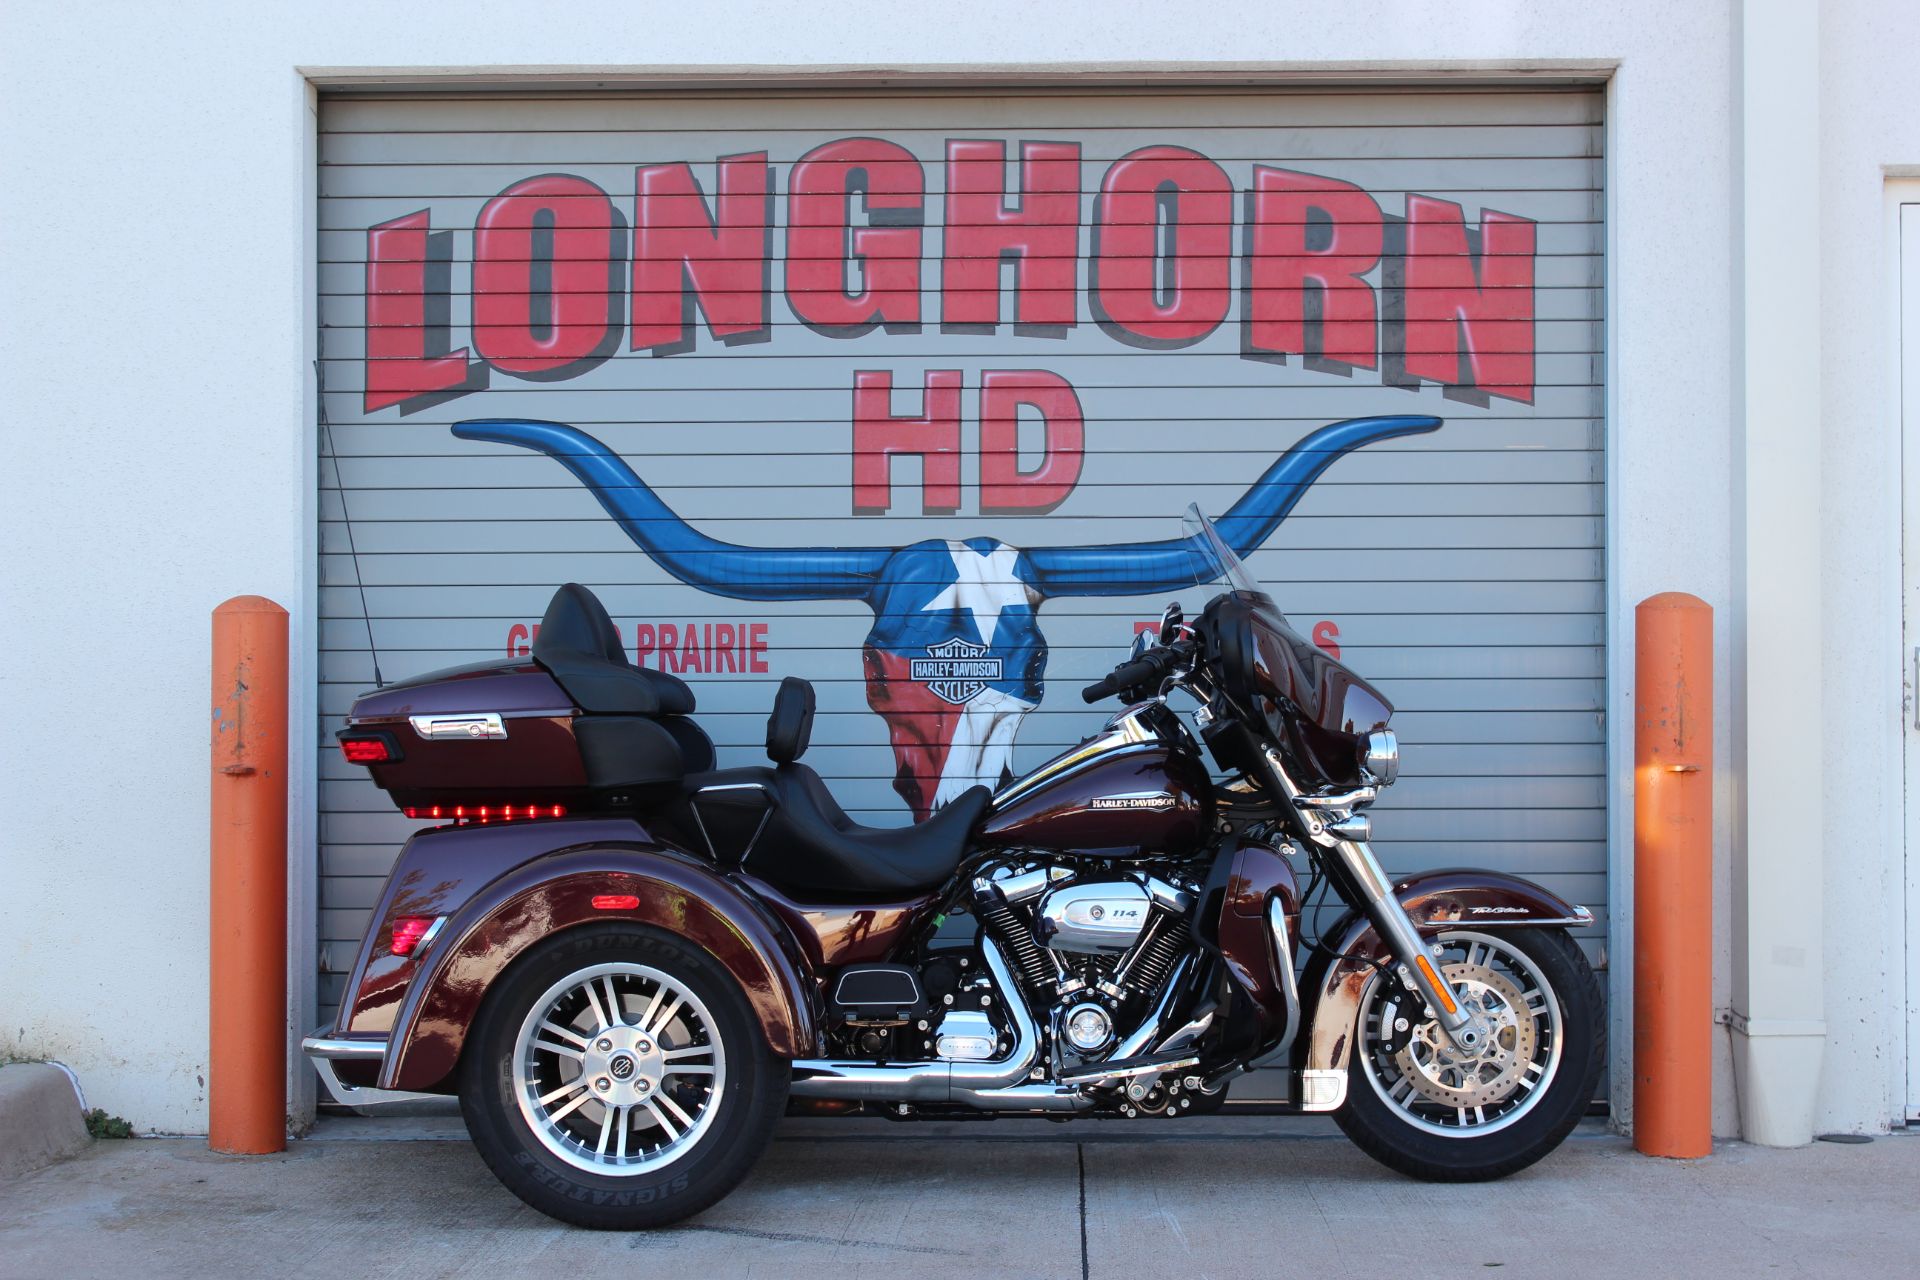 2018 Harley-Davidson Tri Glide® Ultra in Grand Prairie, Texas - Photo 1